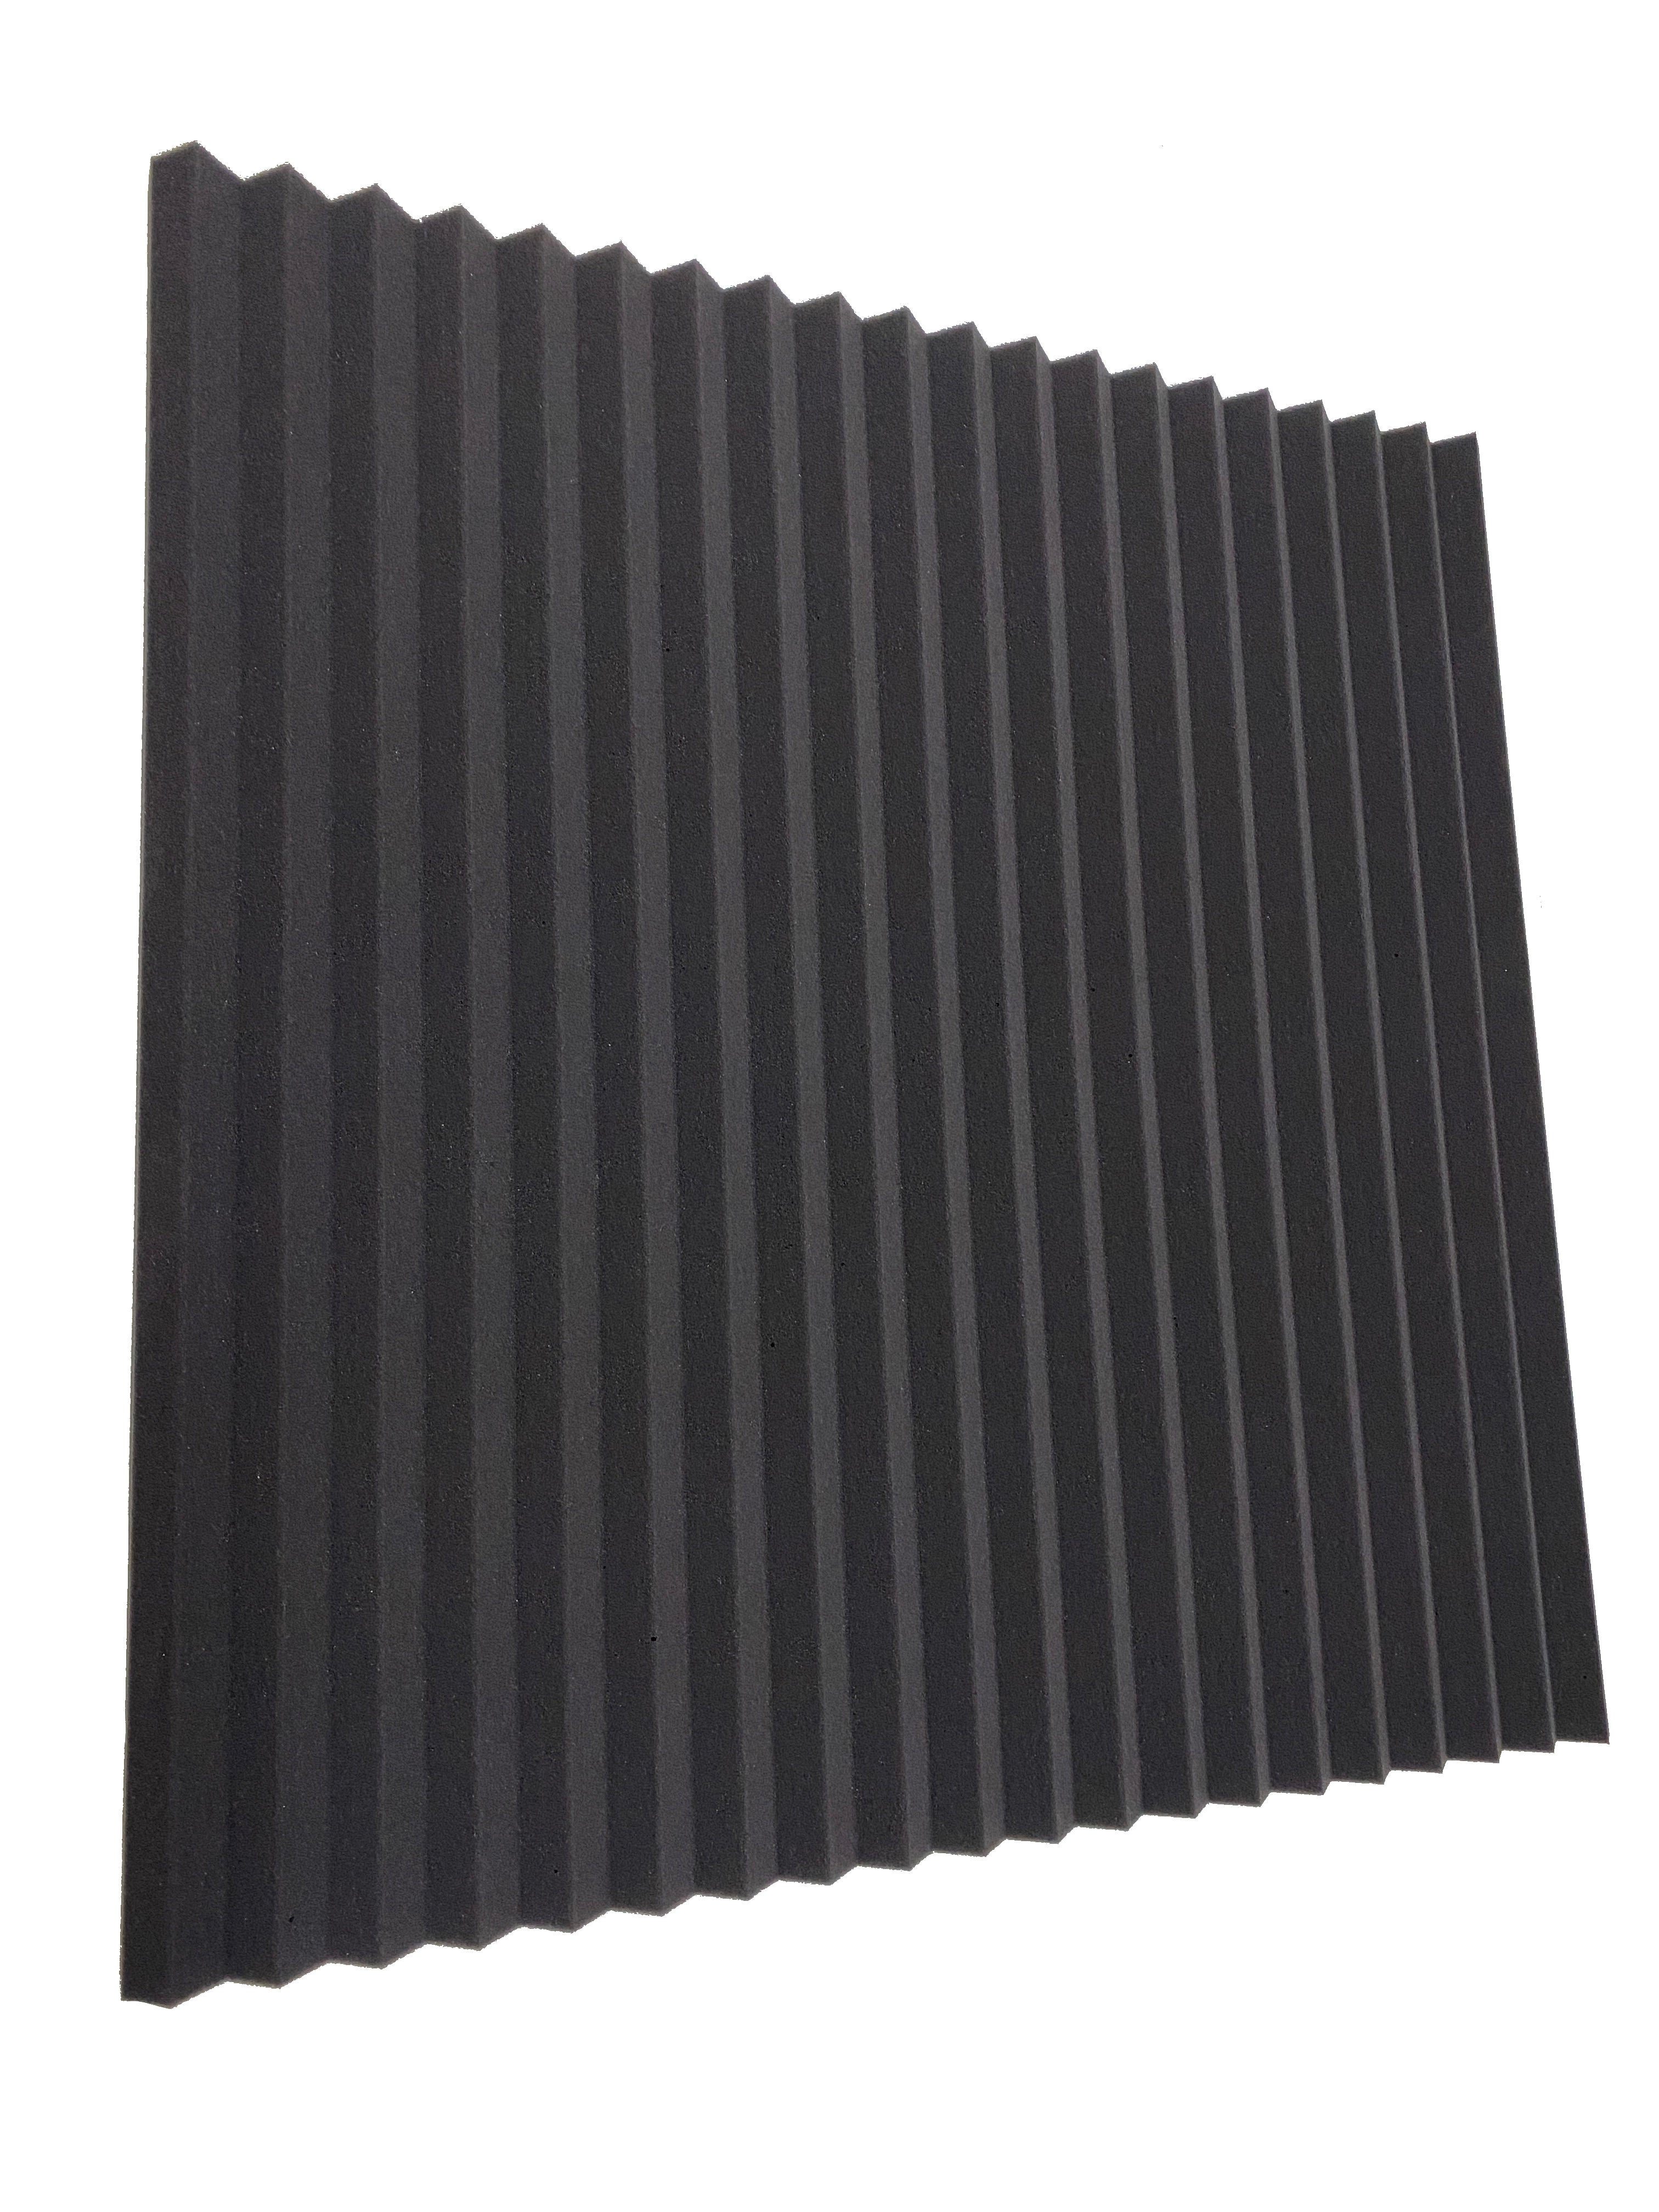 Kaufen dunkelgrau Wedge 30&quot; Acoustic Studio Foam Tile Pack - 6 Tiles, 3.48sqm Coverage